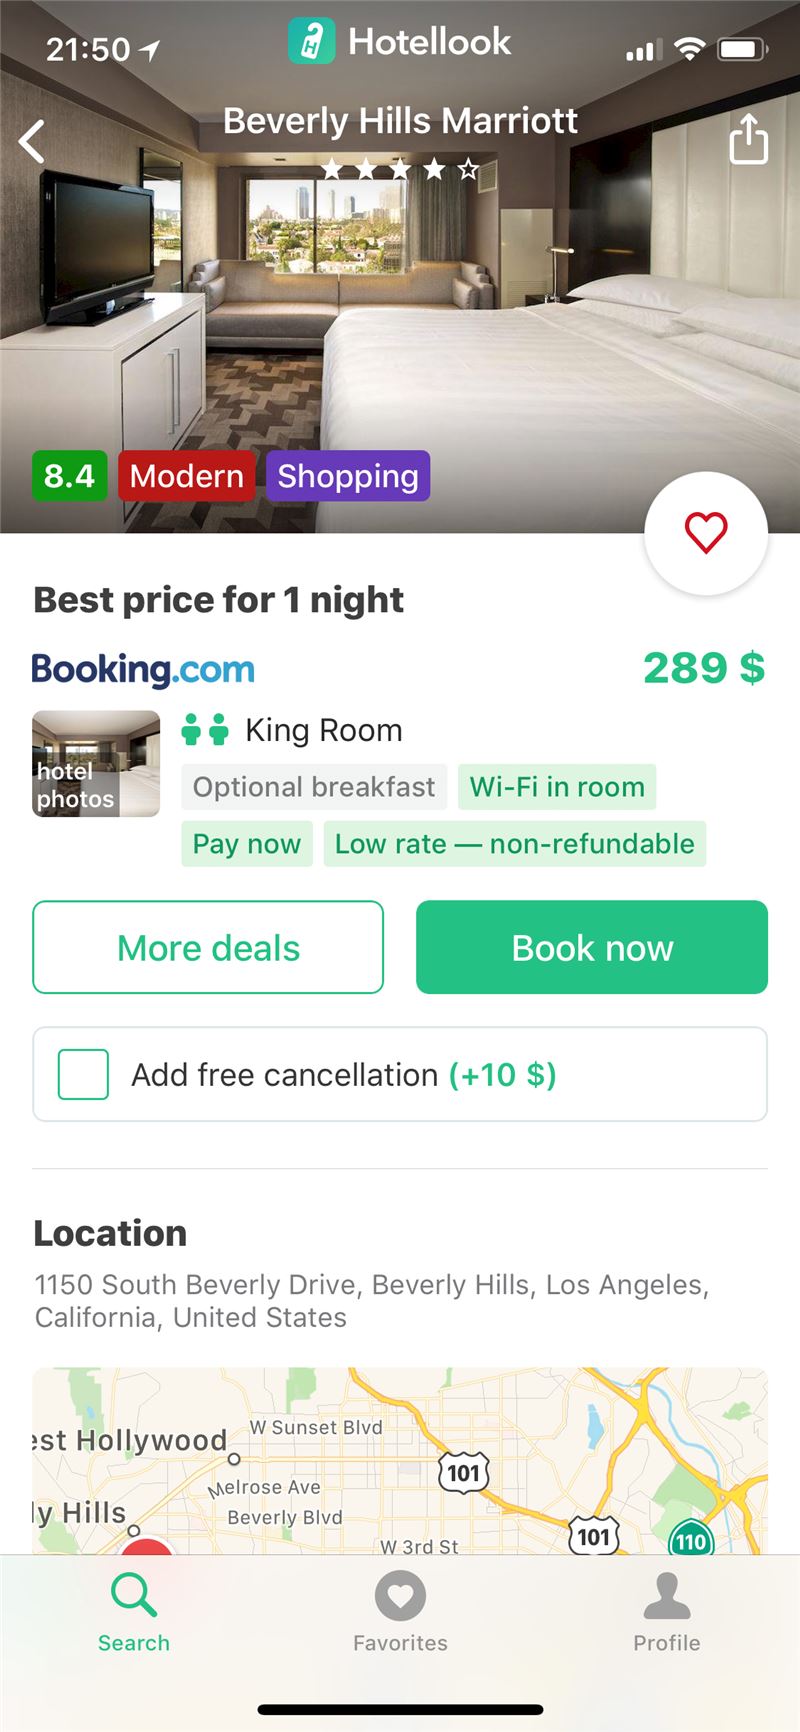 Hotellook Mobile App | The Best Mobile App Awards